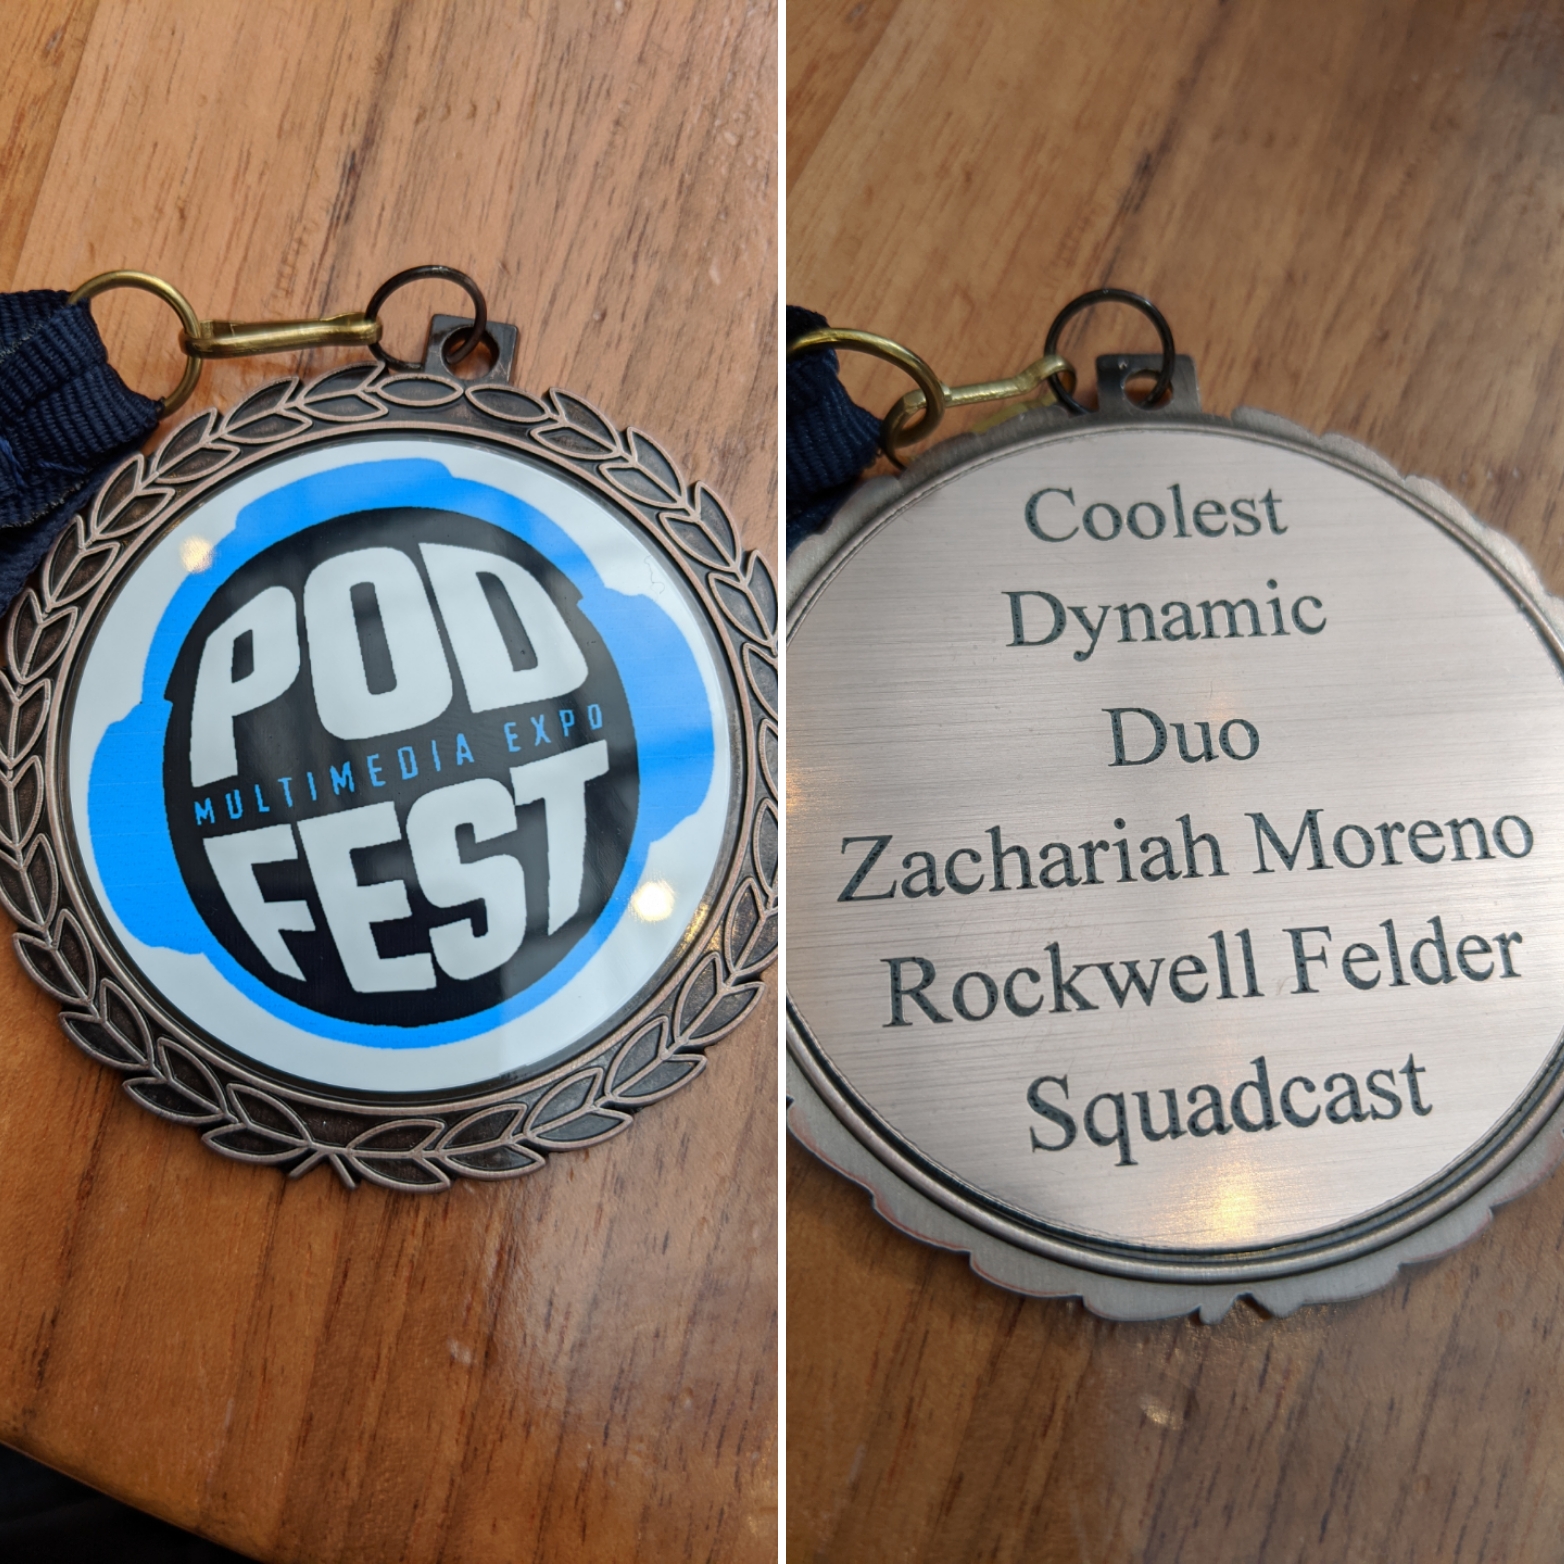 Podfest Coolest Dynamic Duo Award